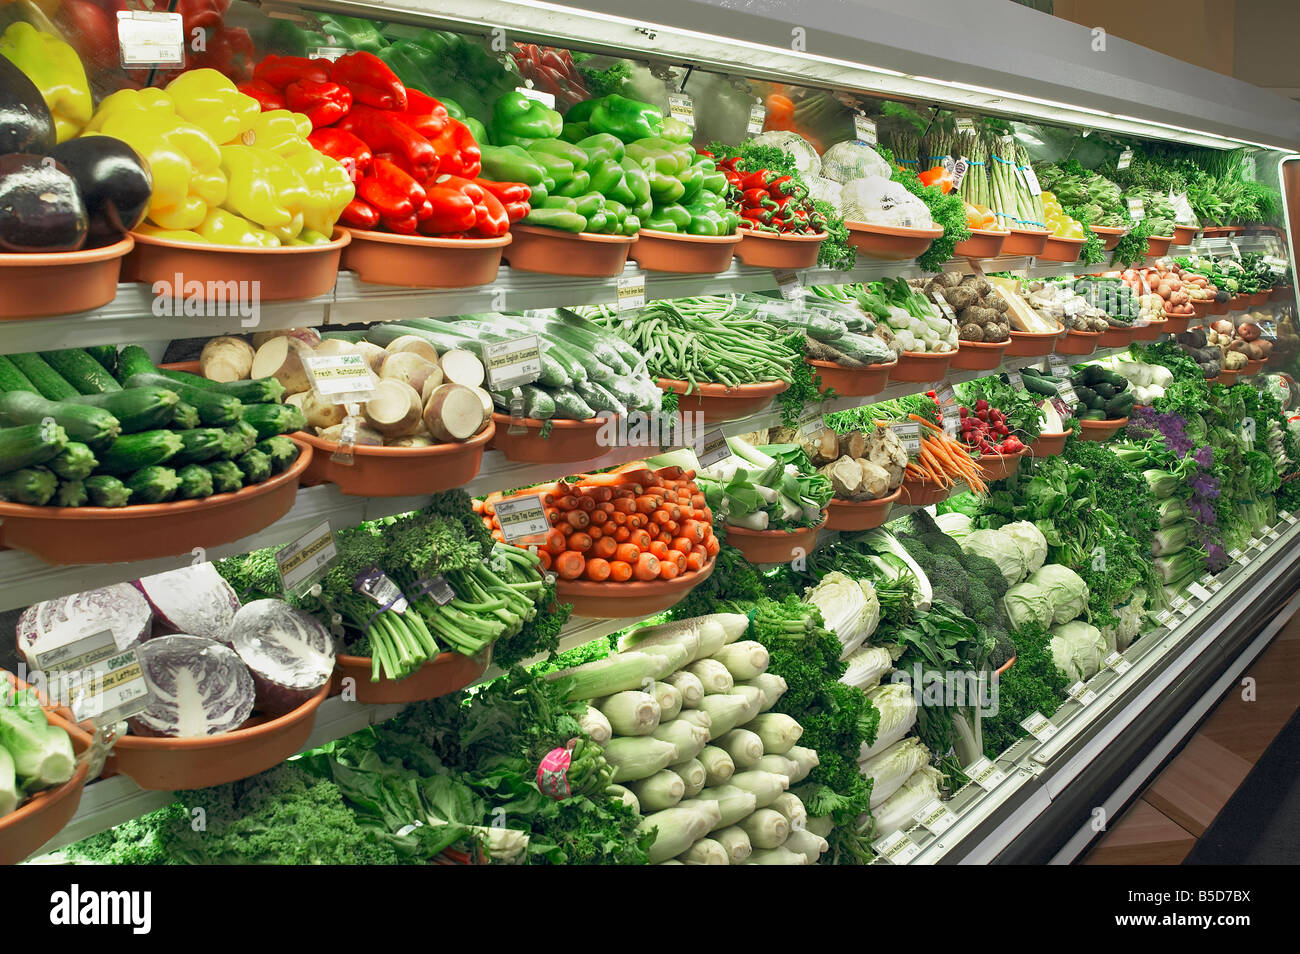 https://c8.alamy.com/comp/B5D7BX/vegetable-produce-on-shelf-in-grocery-food-store-usa-B5D7BX.jpg